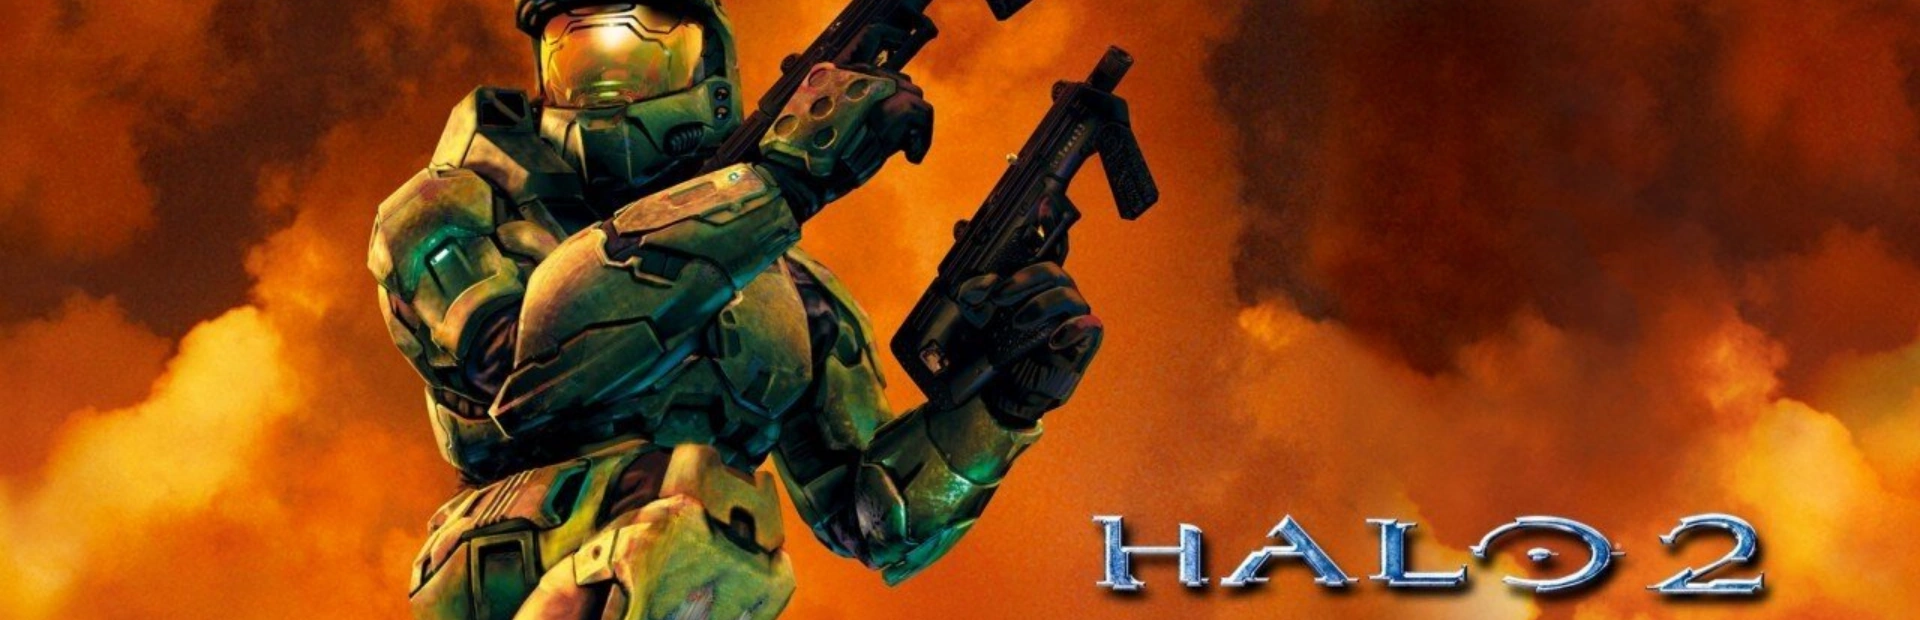 Halo 2.banner2